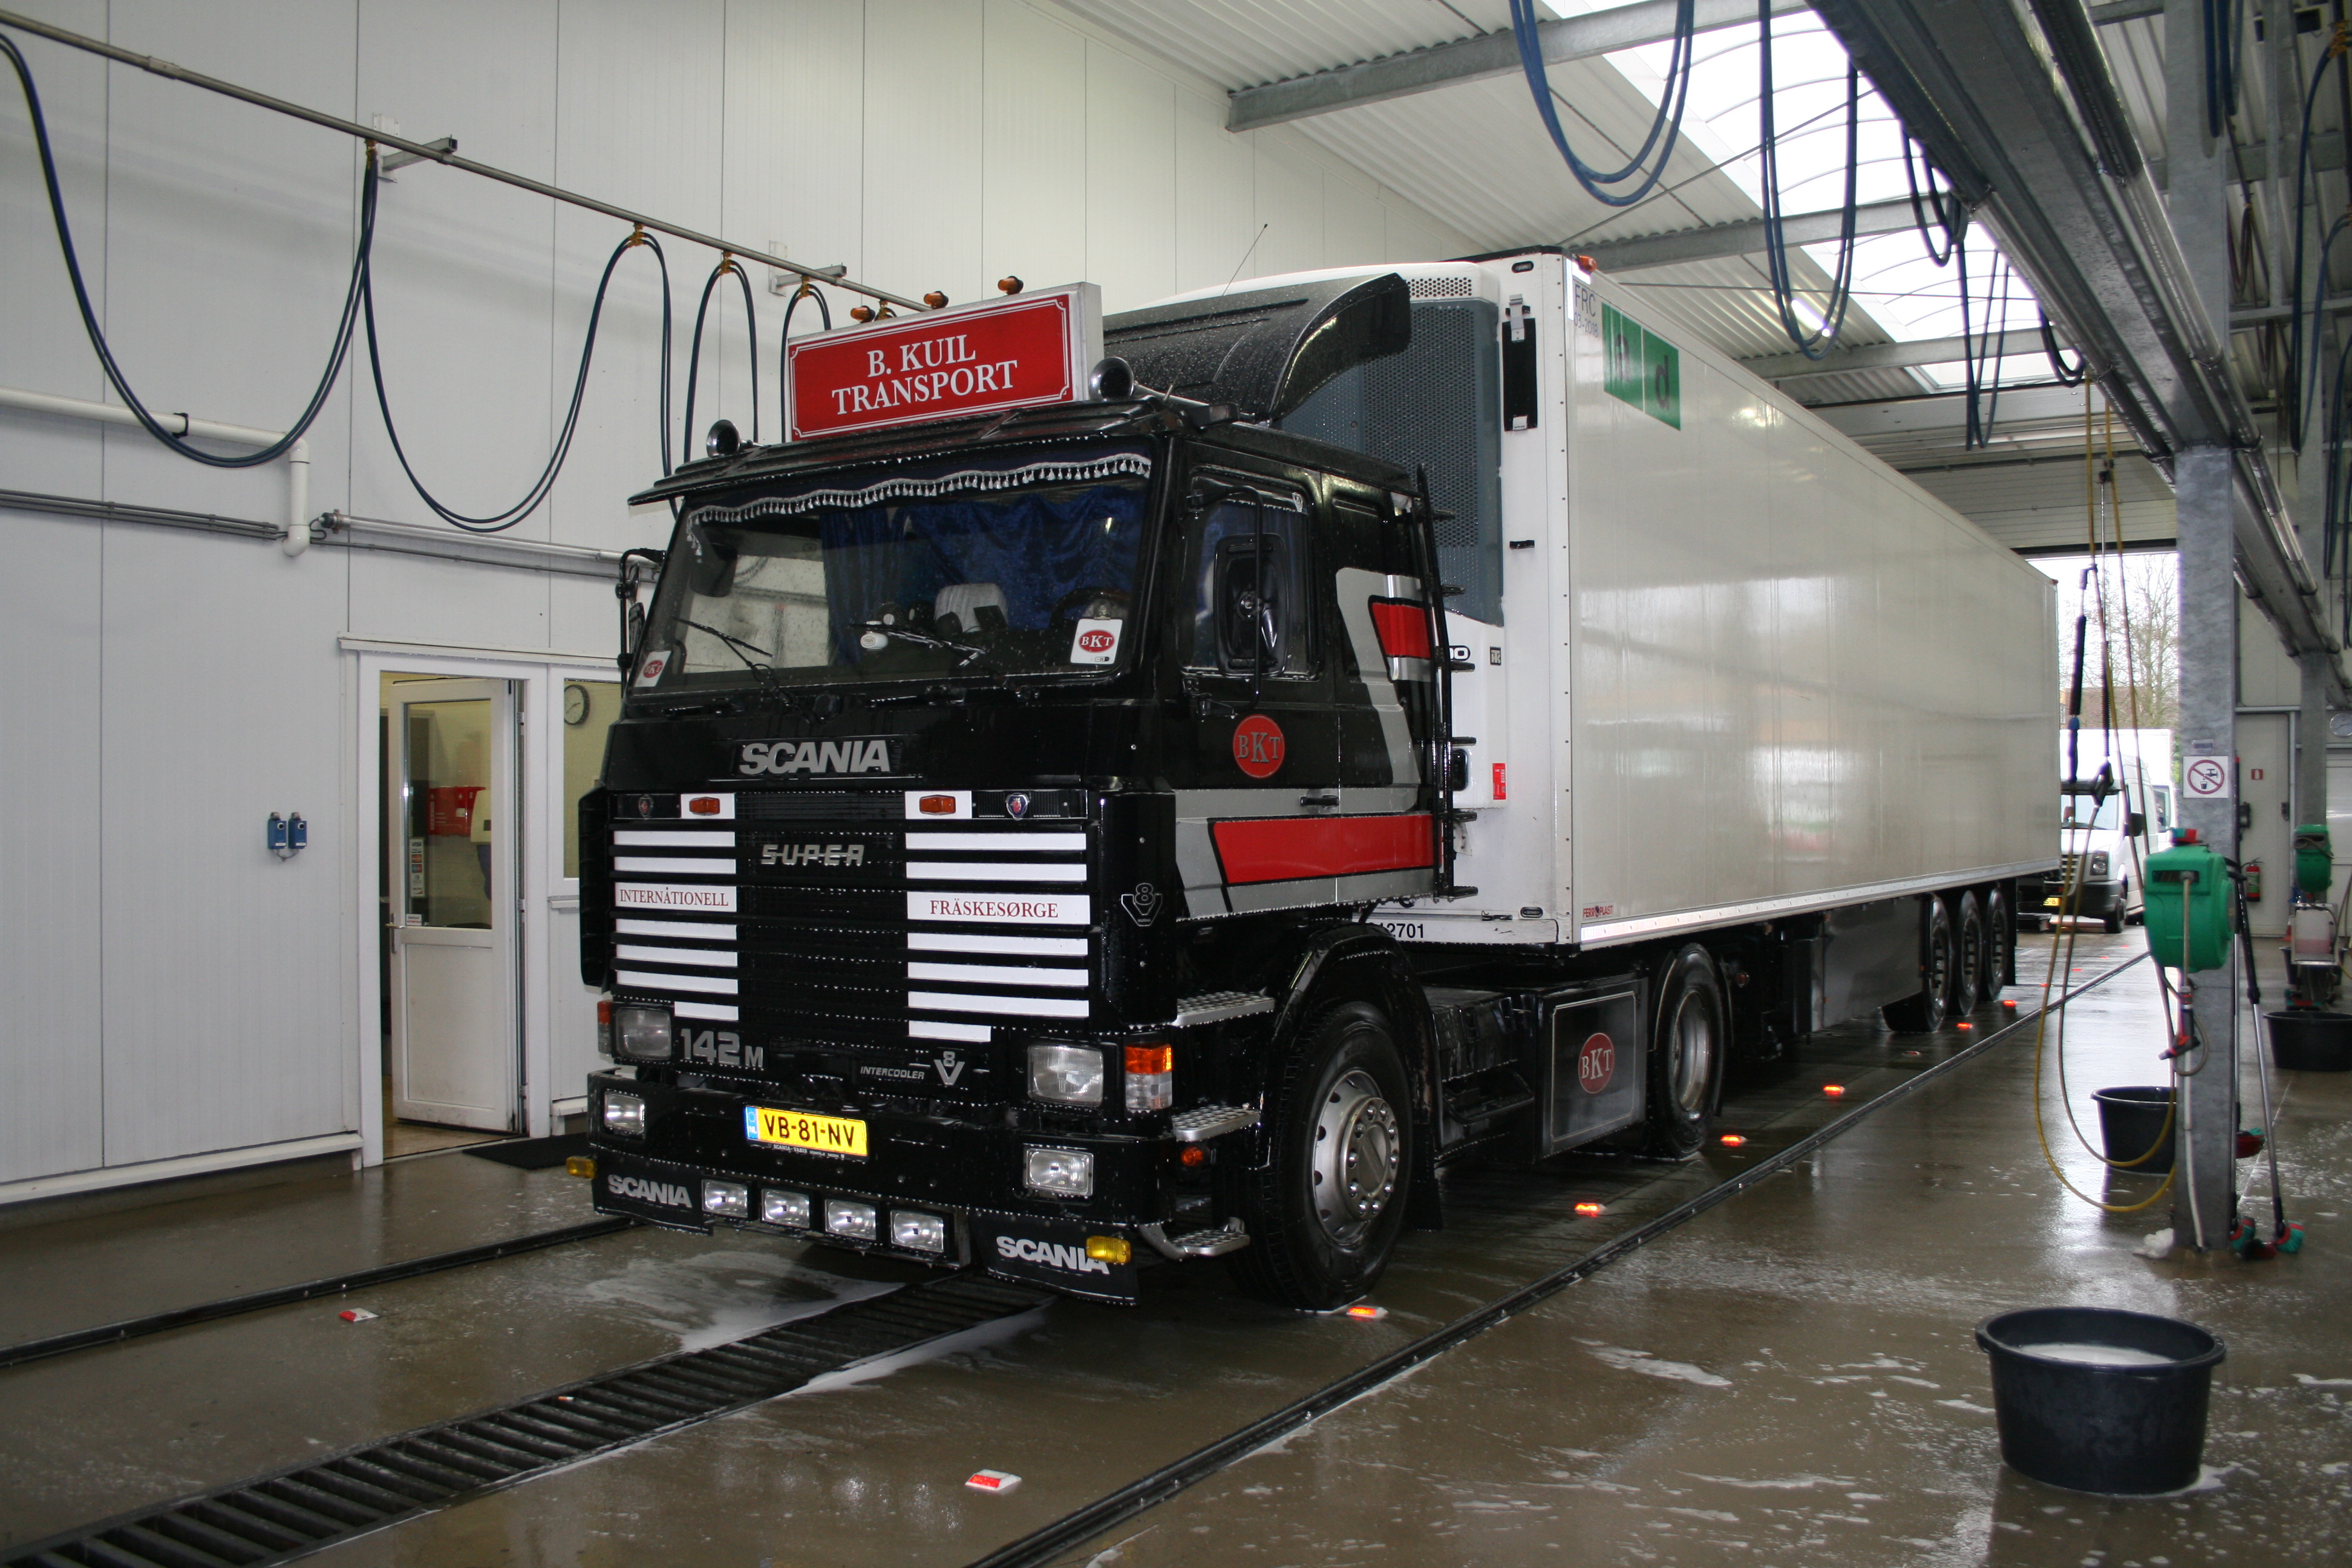 B.Kuil transport truckwash N201